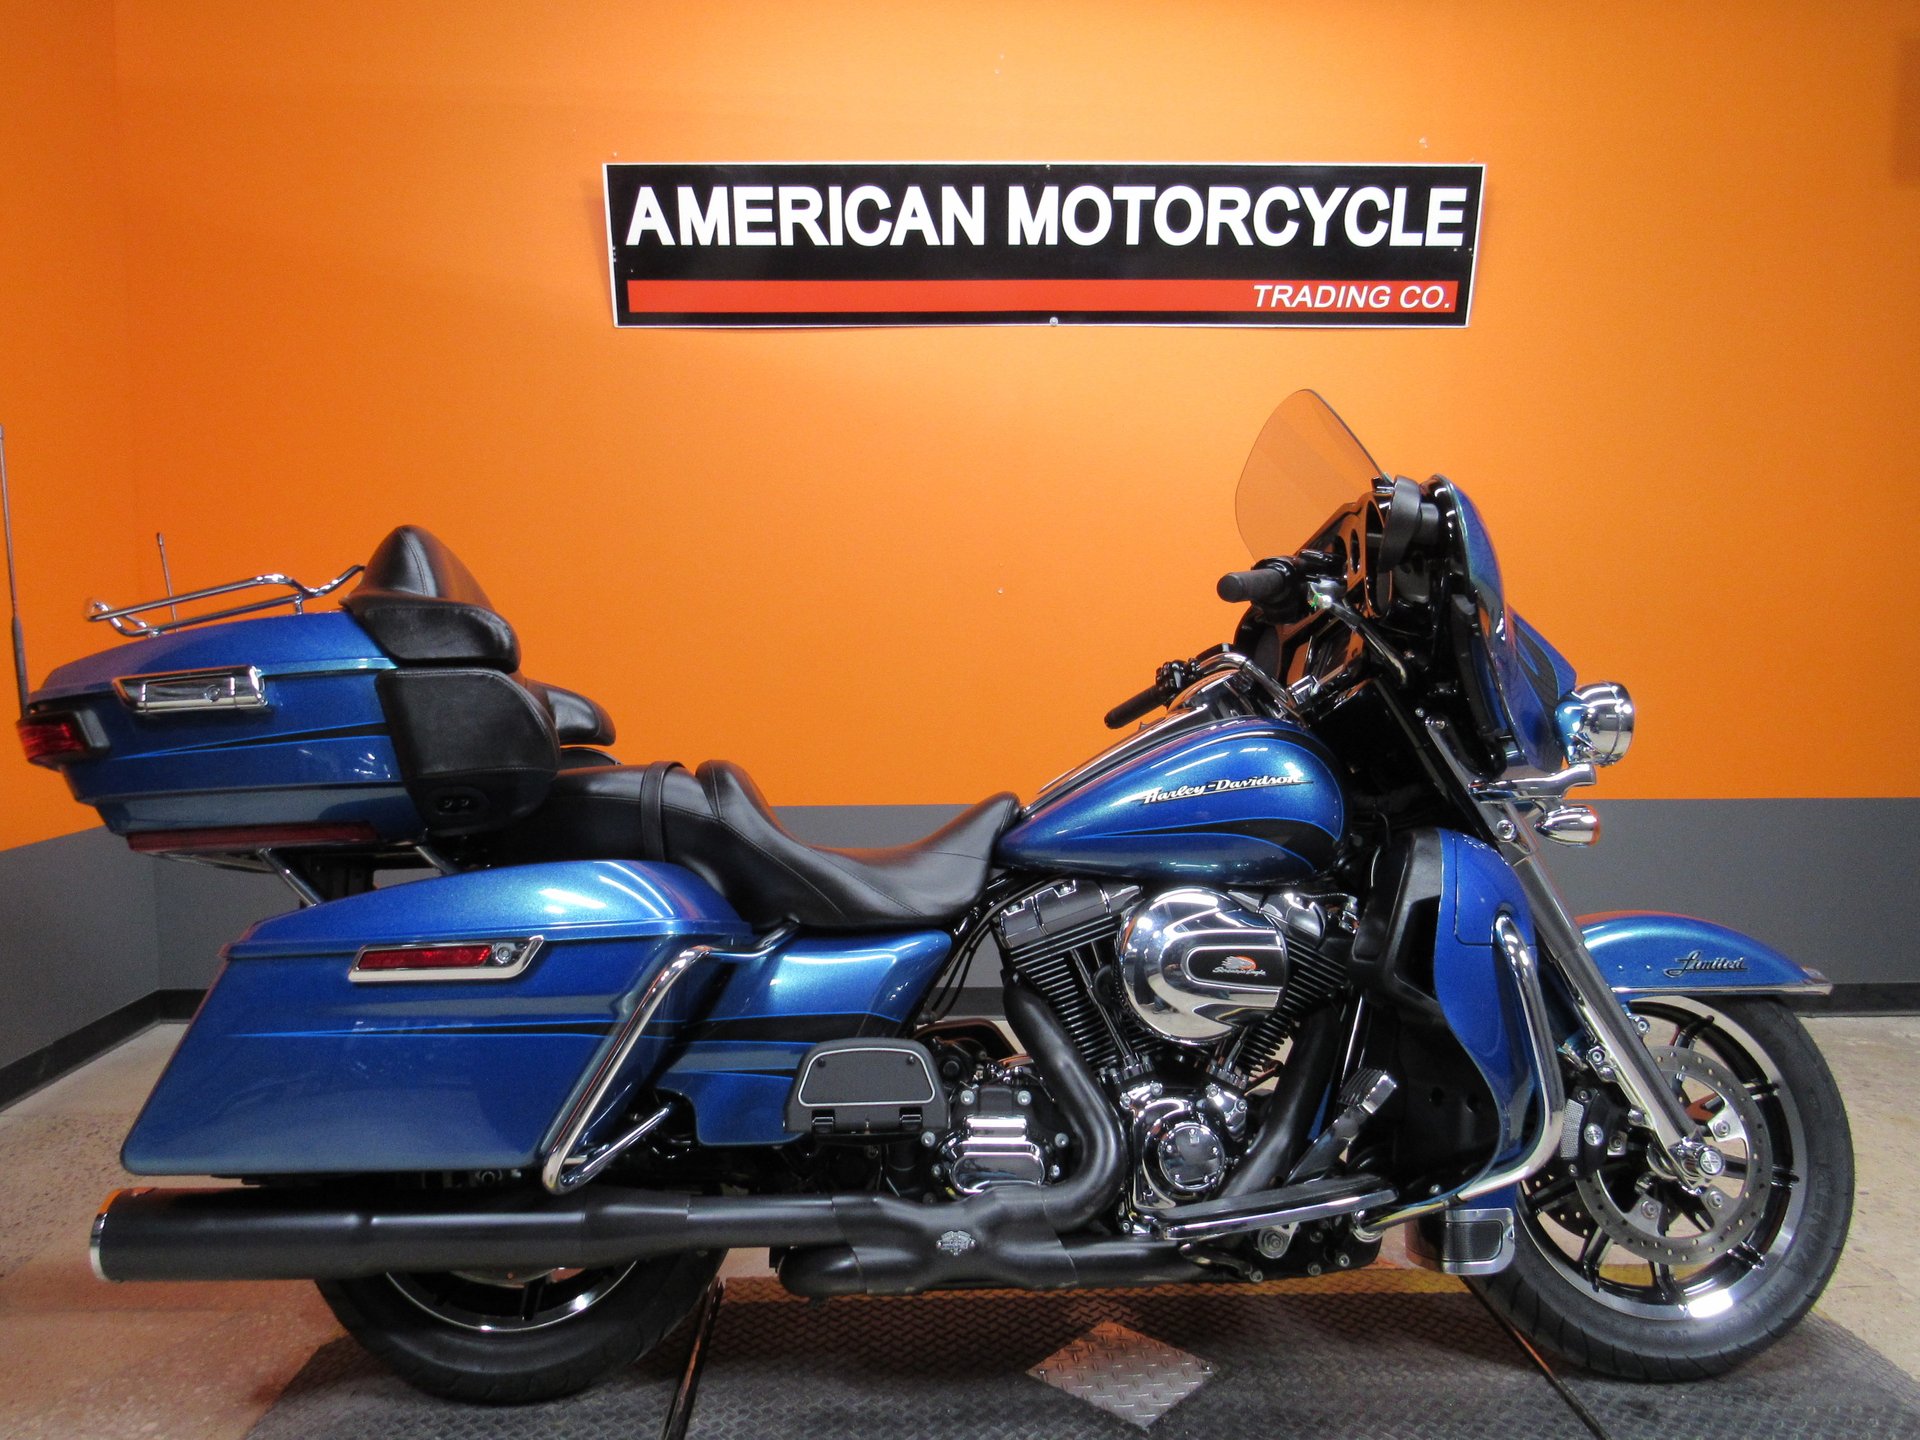 2014 Harley Davidson Ultra Limited American Motorcycle Trading Company Used Harley Davidson Motorcycles